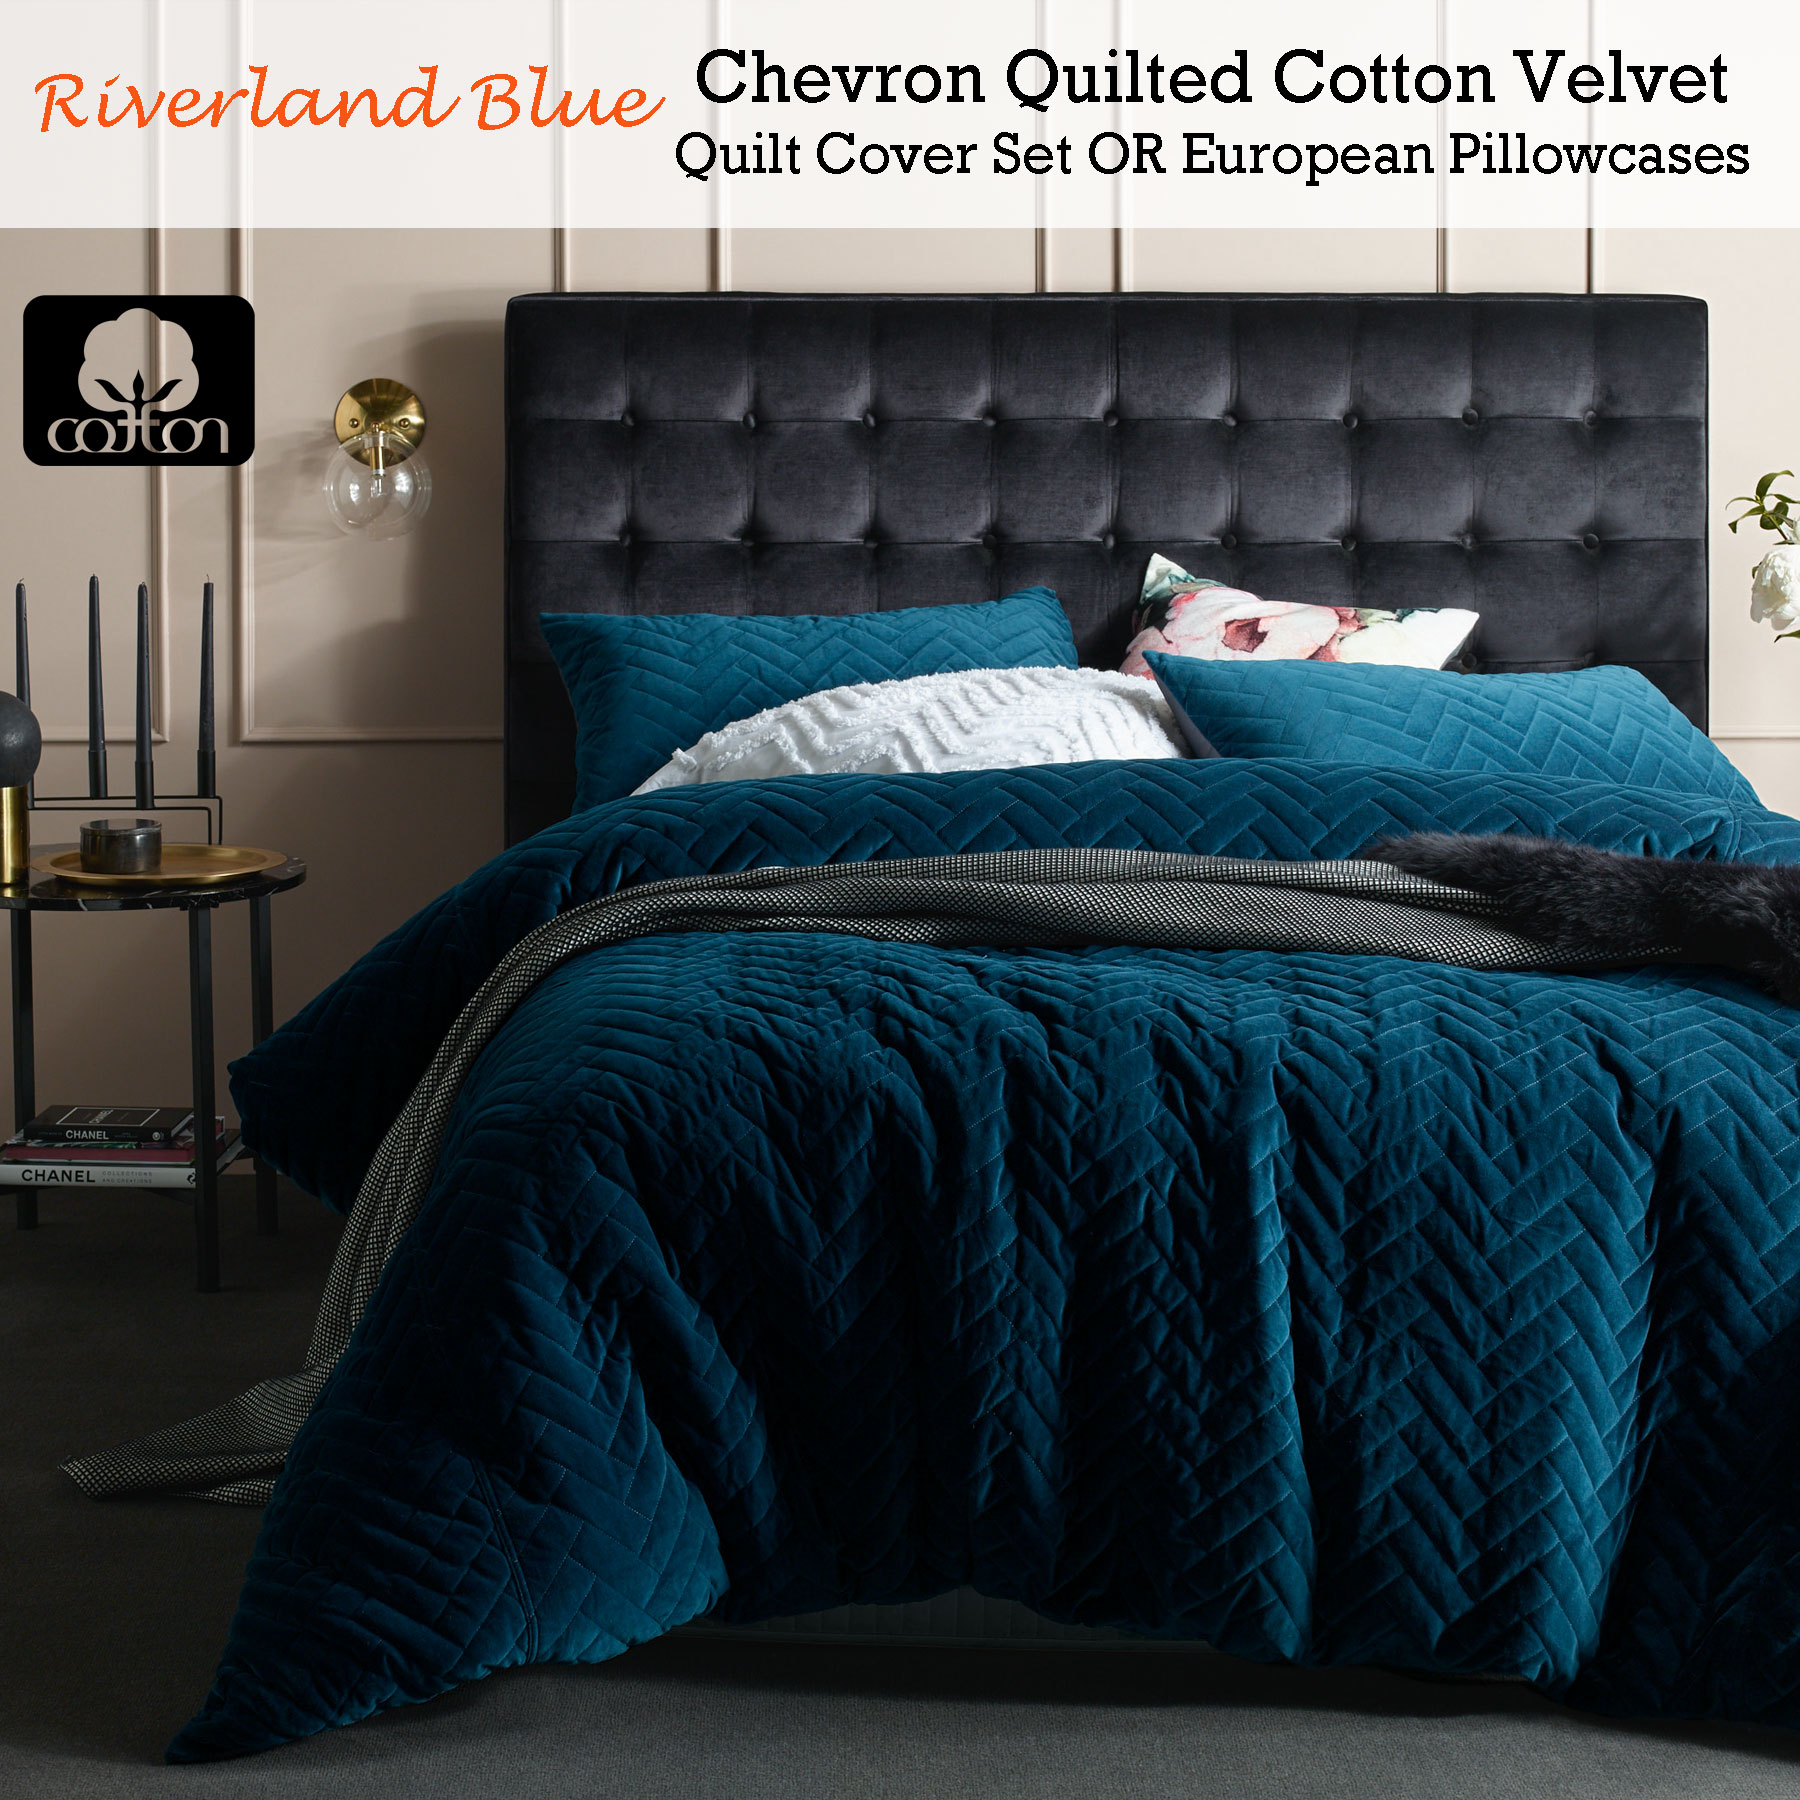 Riverland Blue Cotton Velvet Chevron Quilted Quilt Cover Set Or